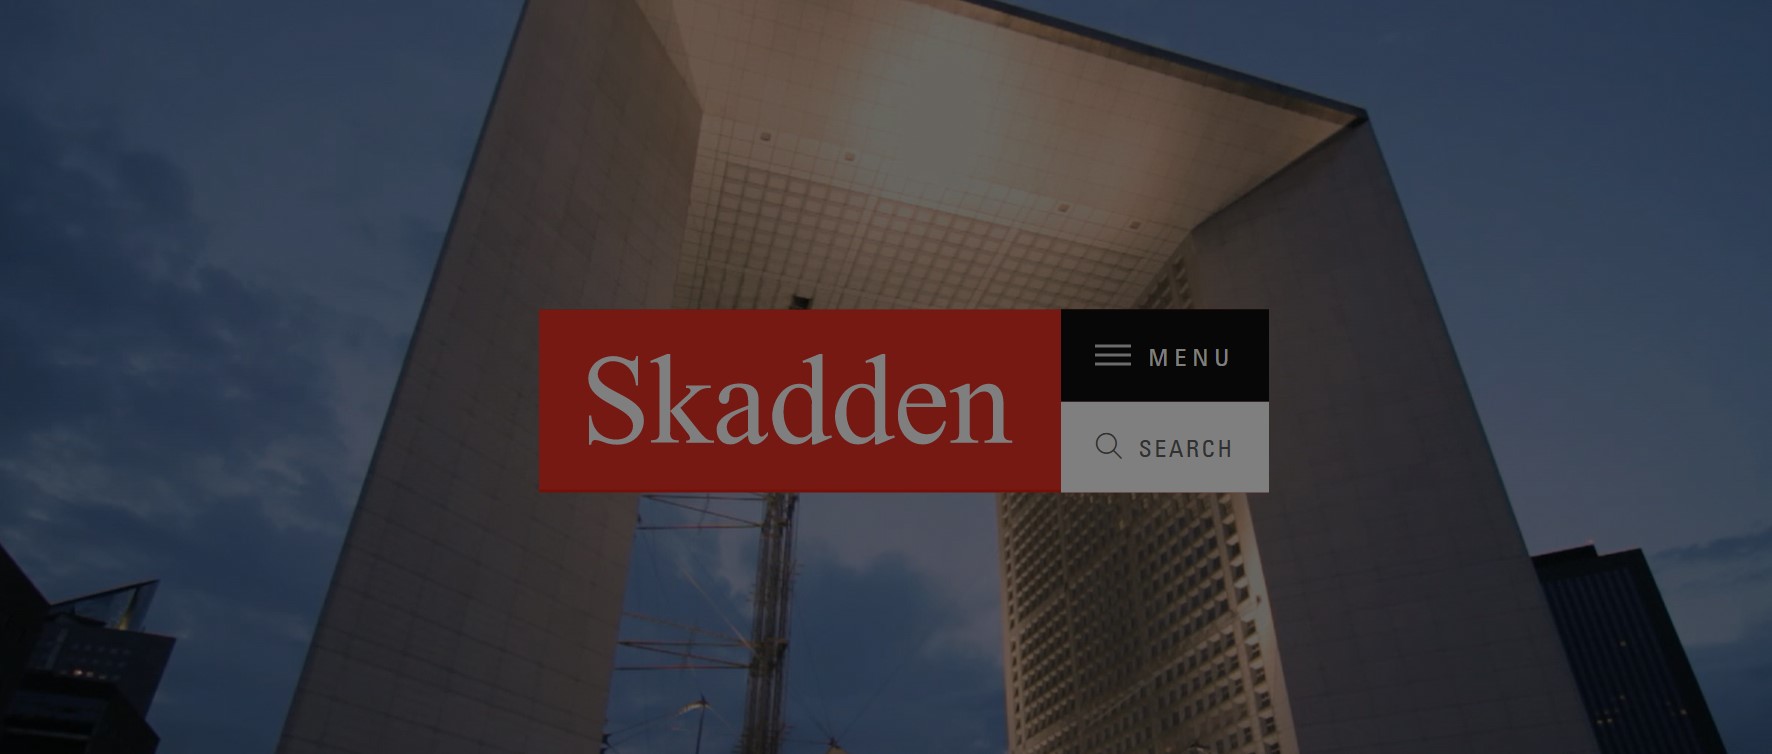 Skadden | Law firm in NYC